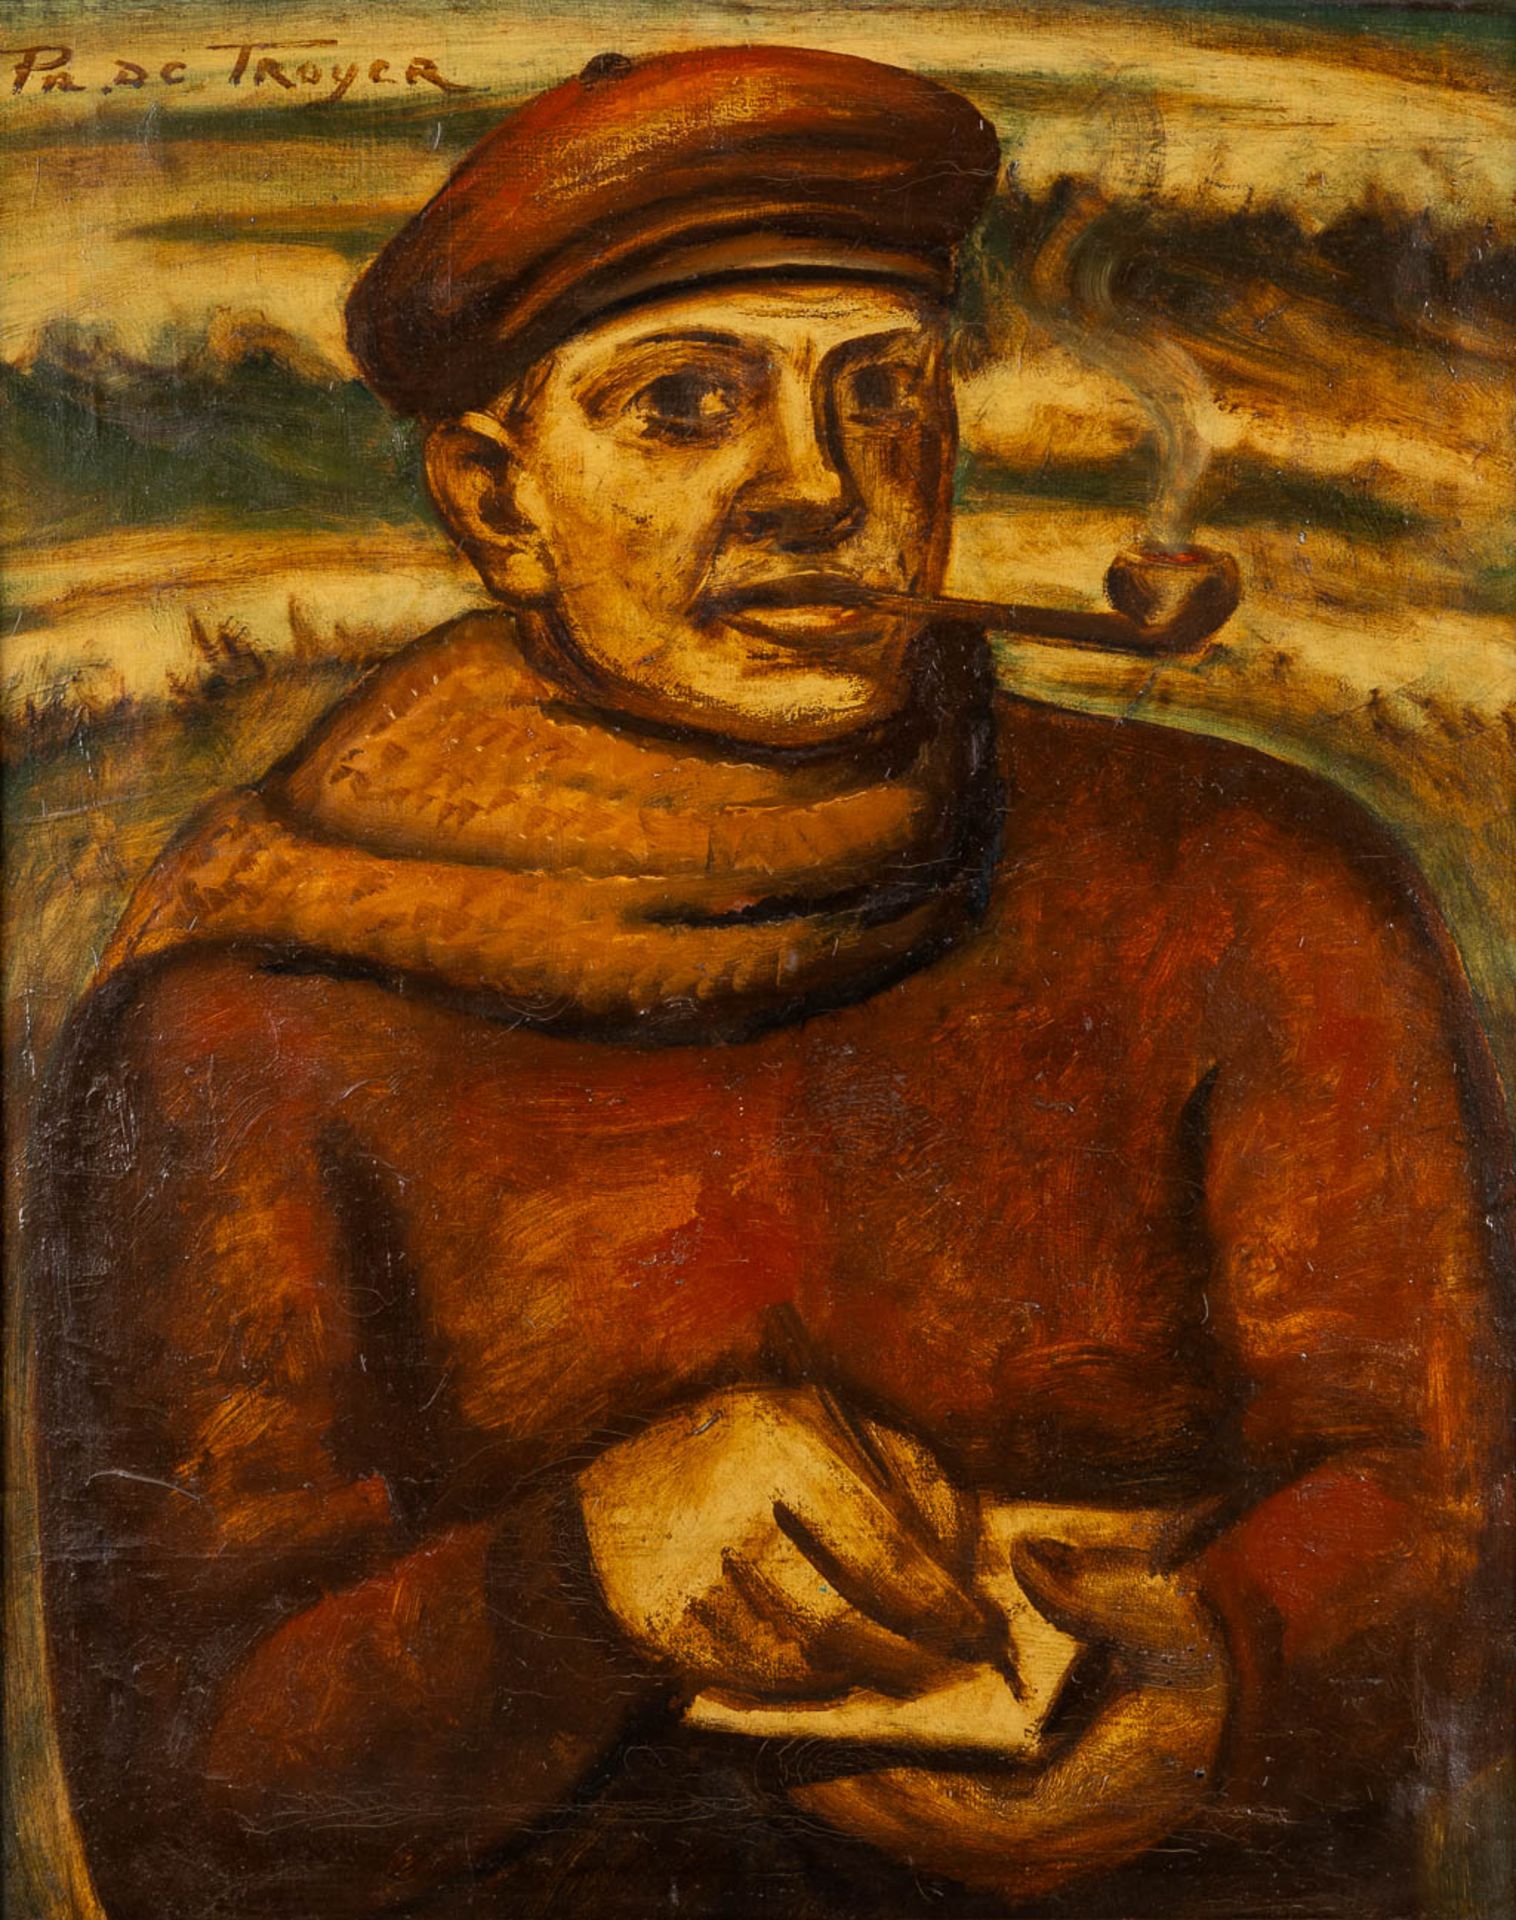 Prosper DE TROYER (1880-1961) 'Self Portrait' oil on canvas. (W:74 x H:92 cm)